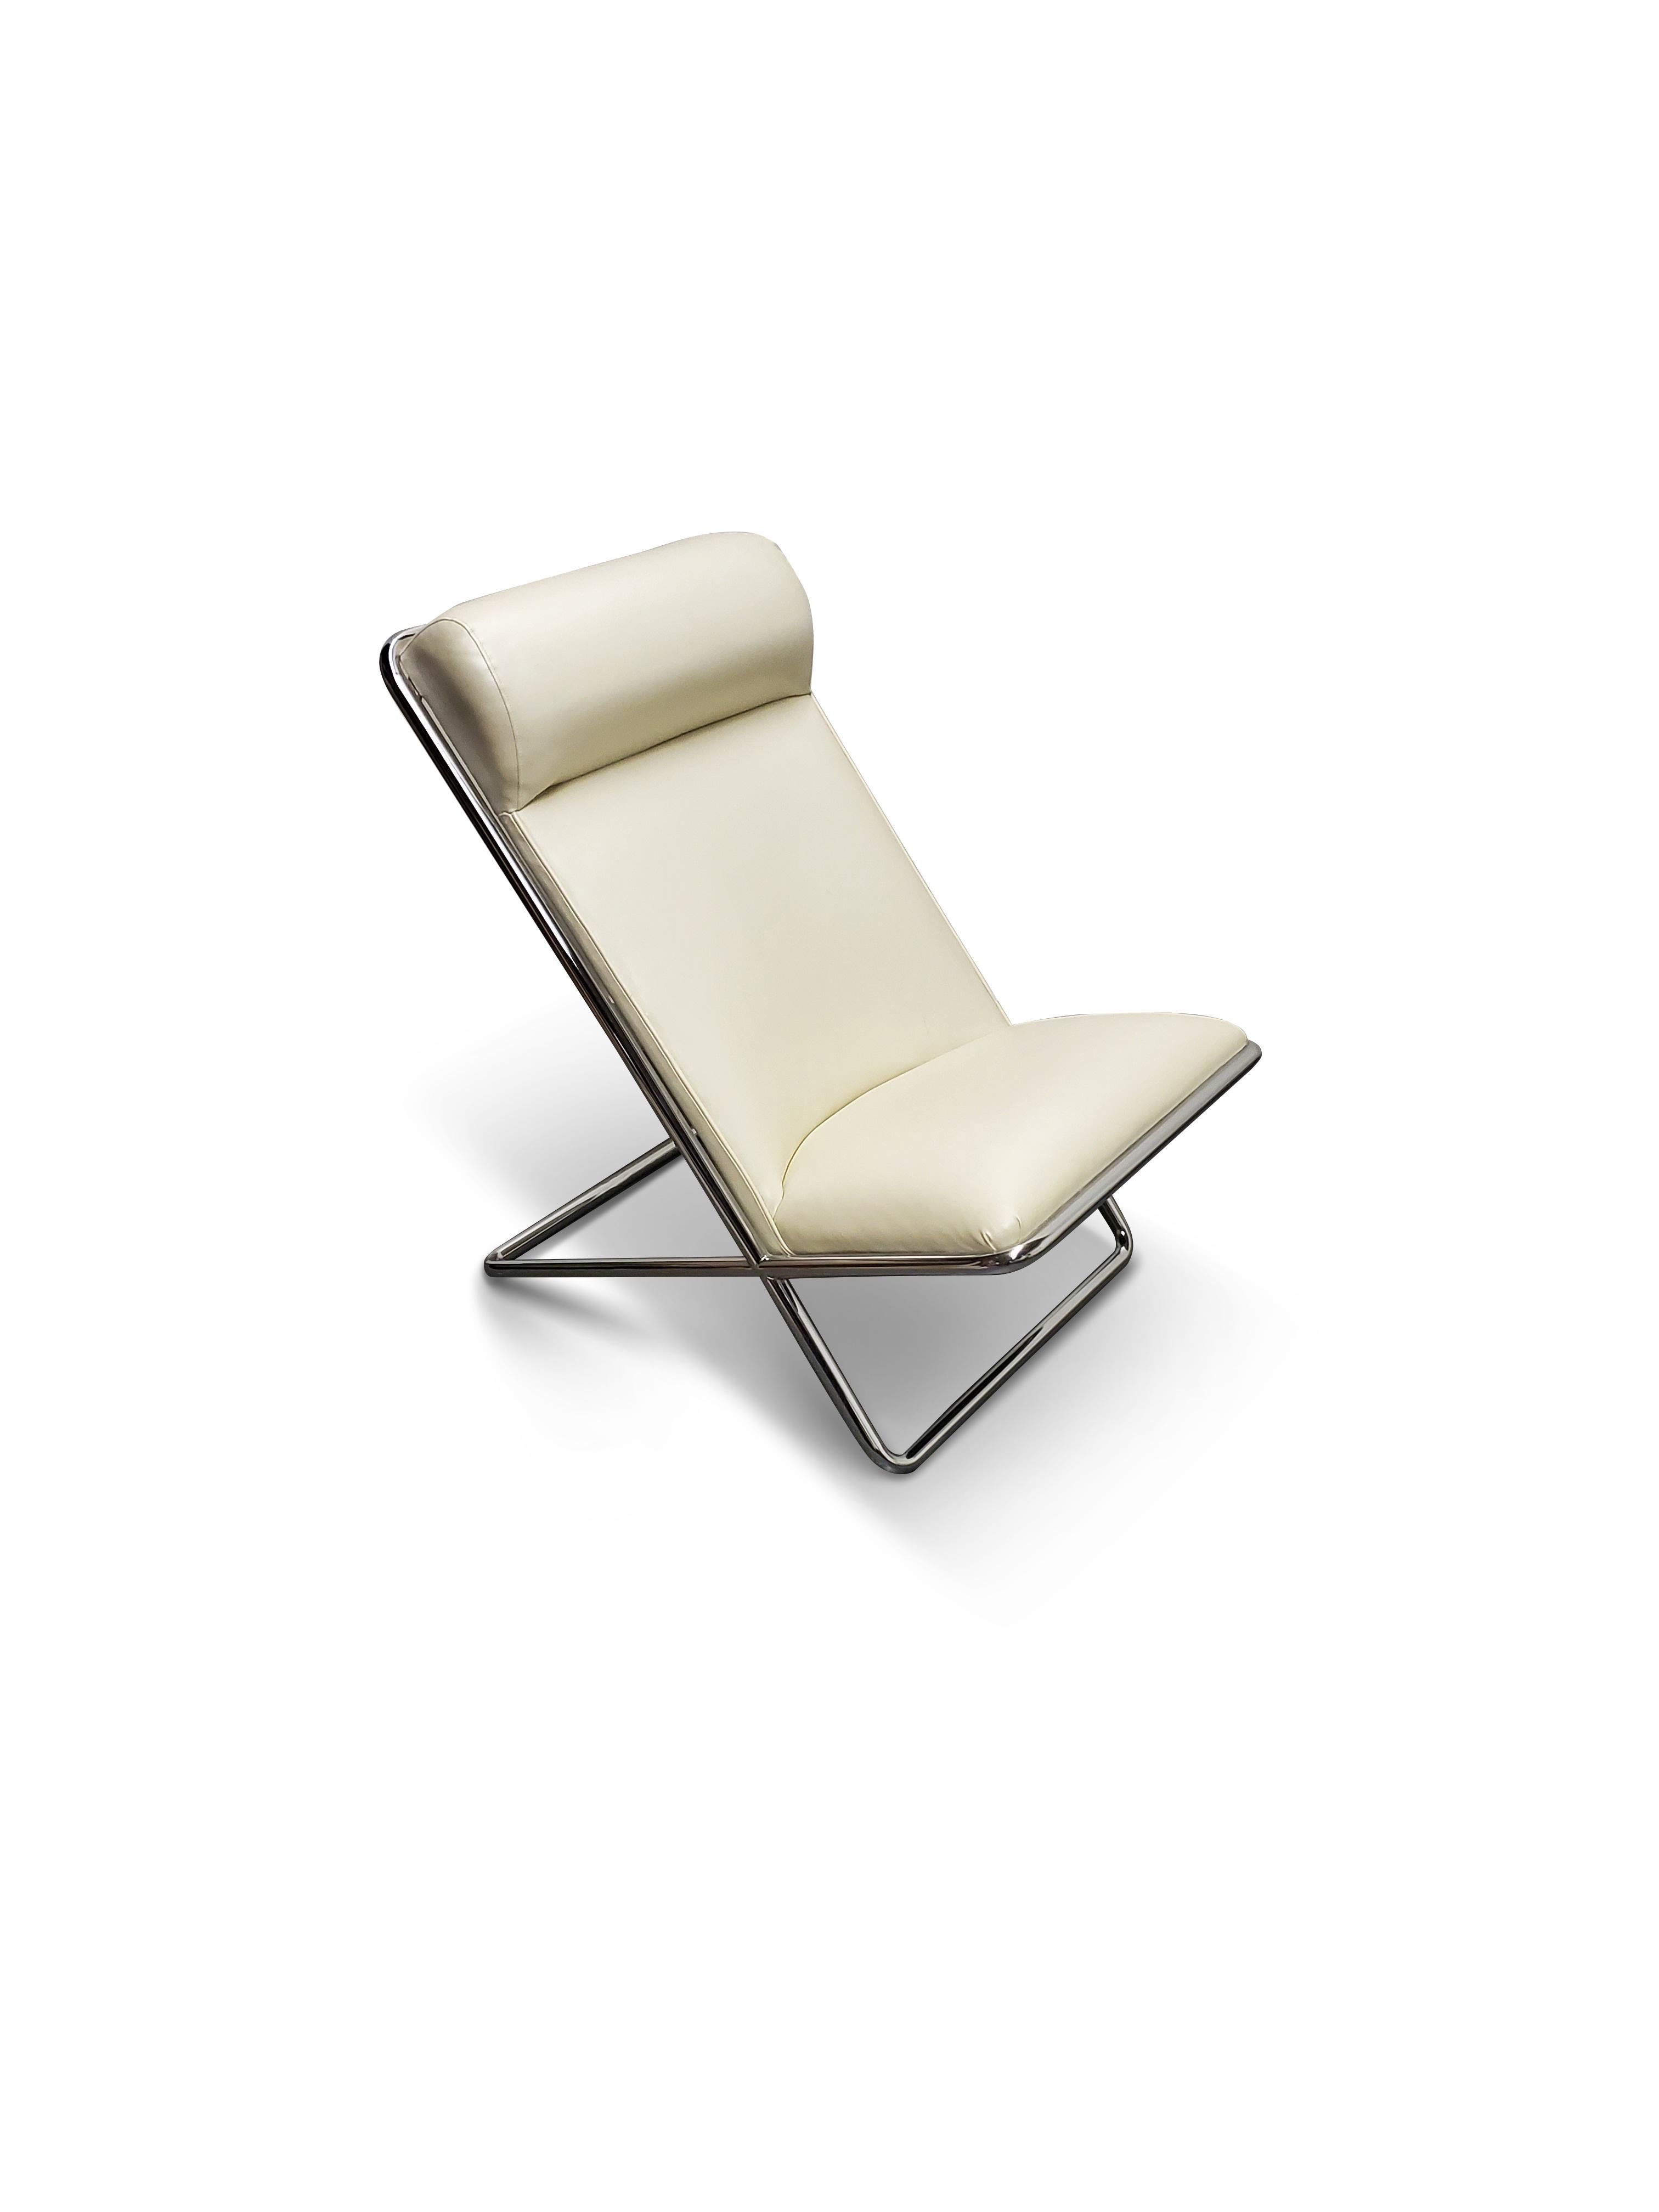 Ward Bennett Scissor Lounge Chair  For Sale 2